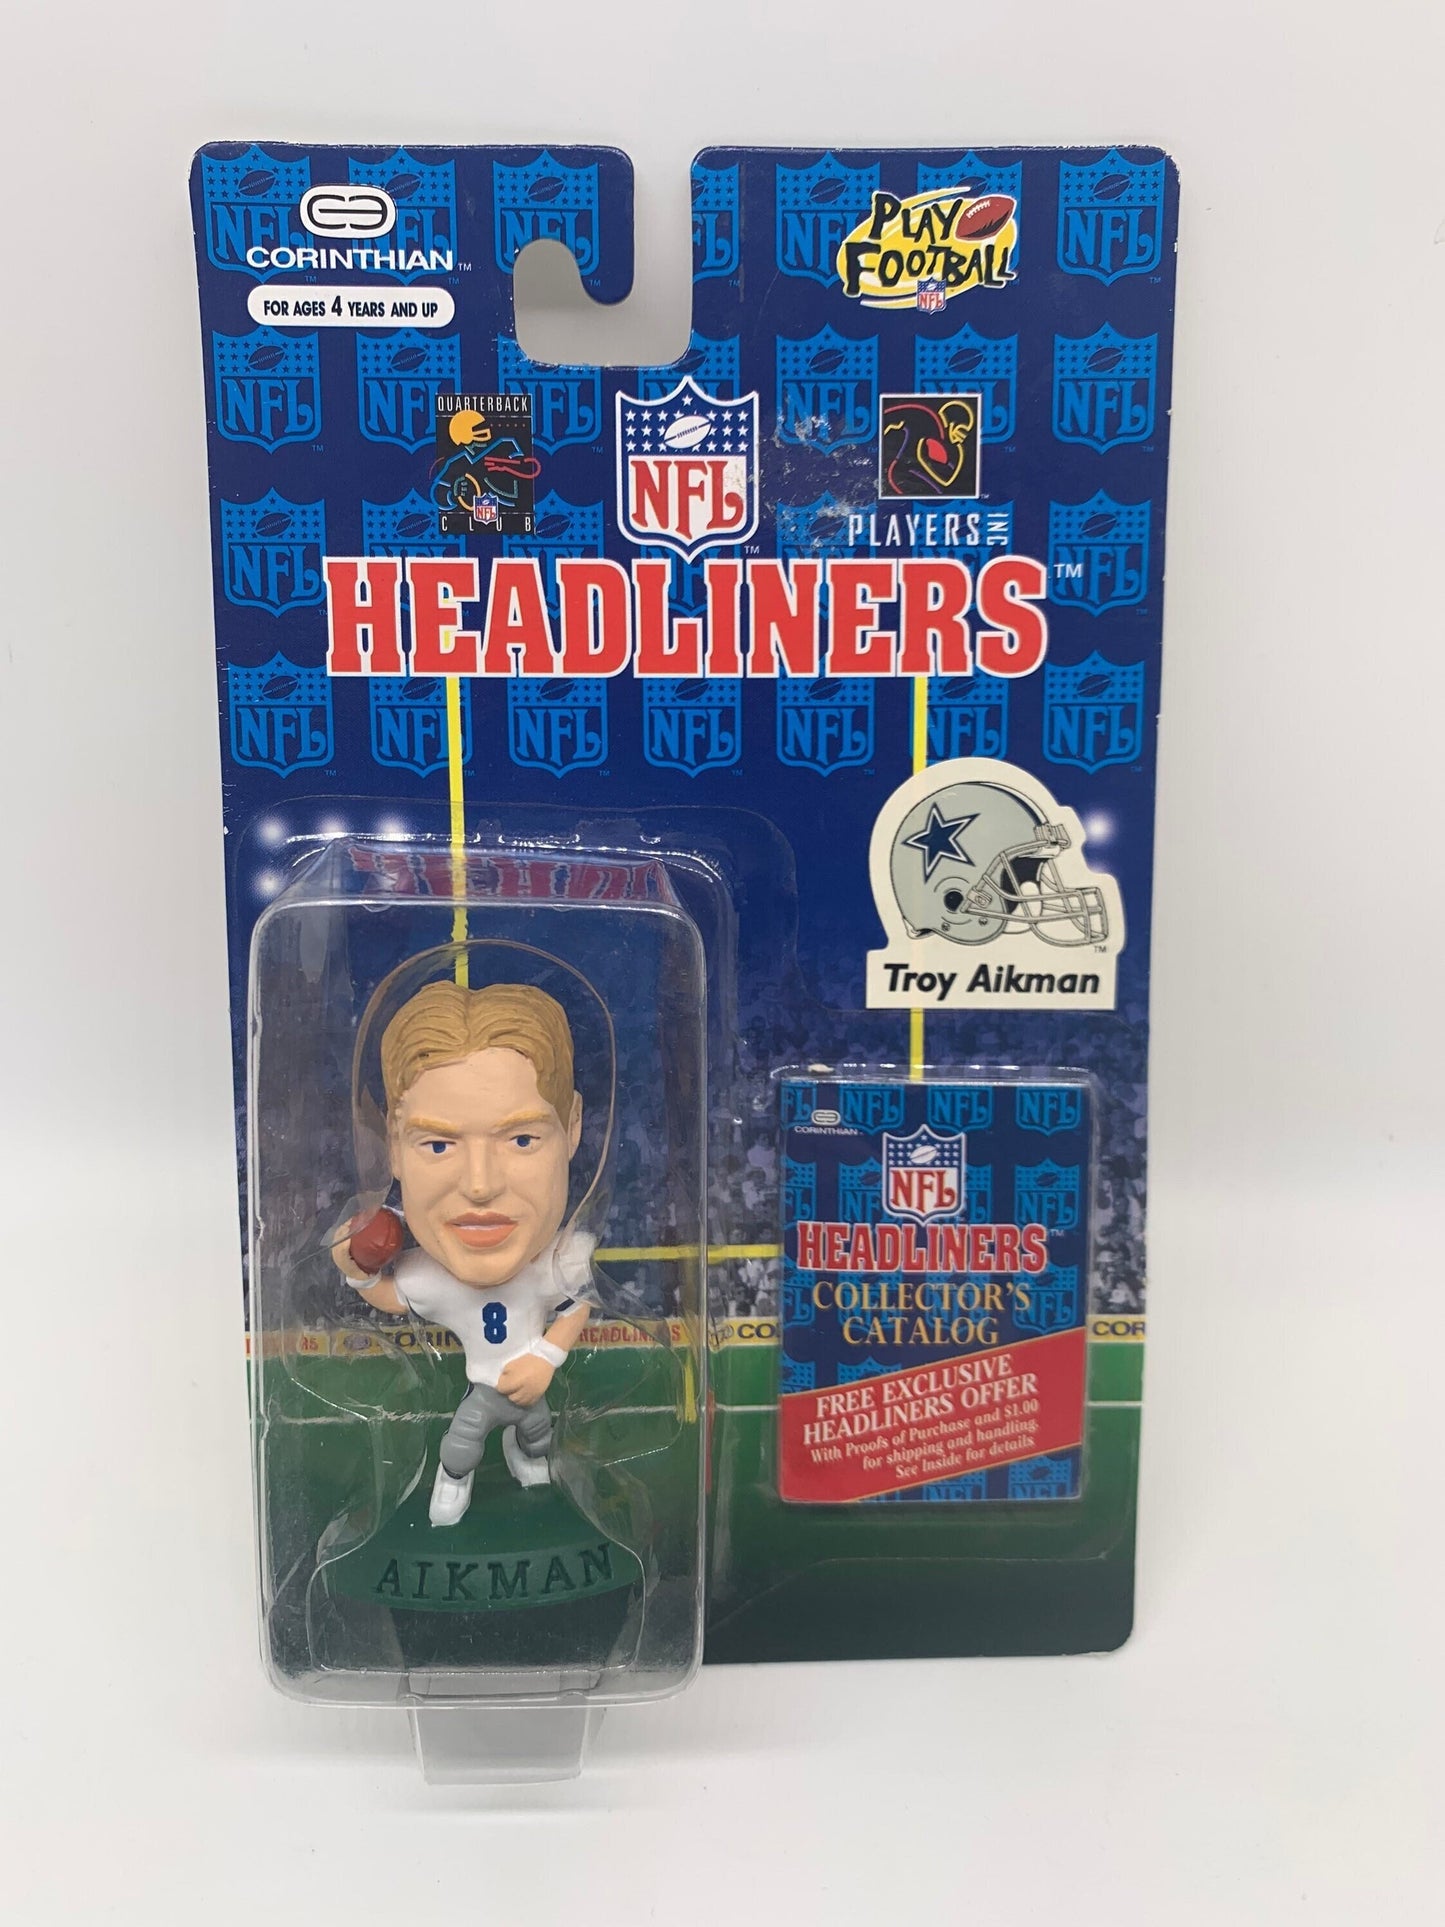 Headliners Troy Aikman Dallas Cowboys Collectable Figure Sports Memorabilia Miniature Figurine Perfect Birthday Gift Football Deco